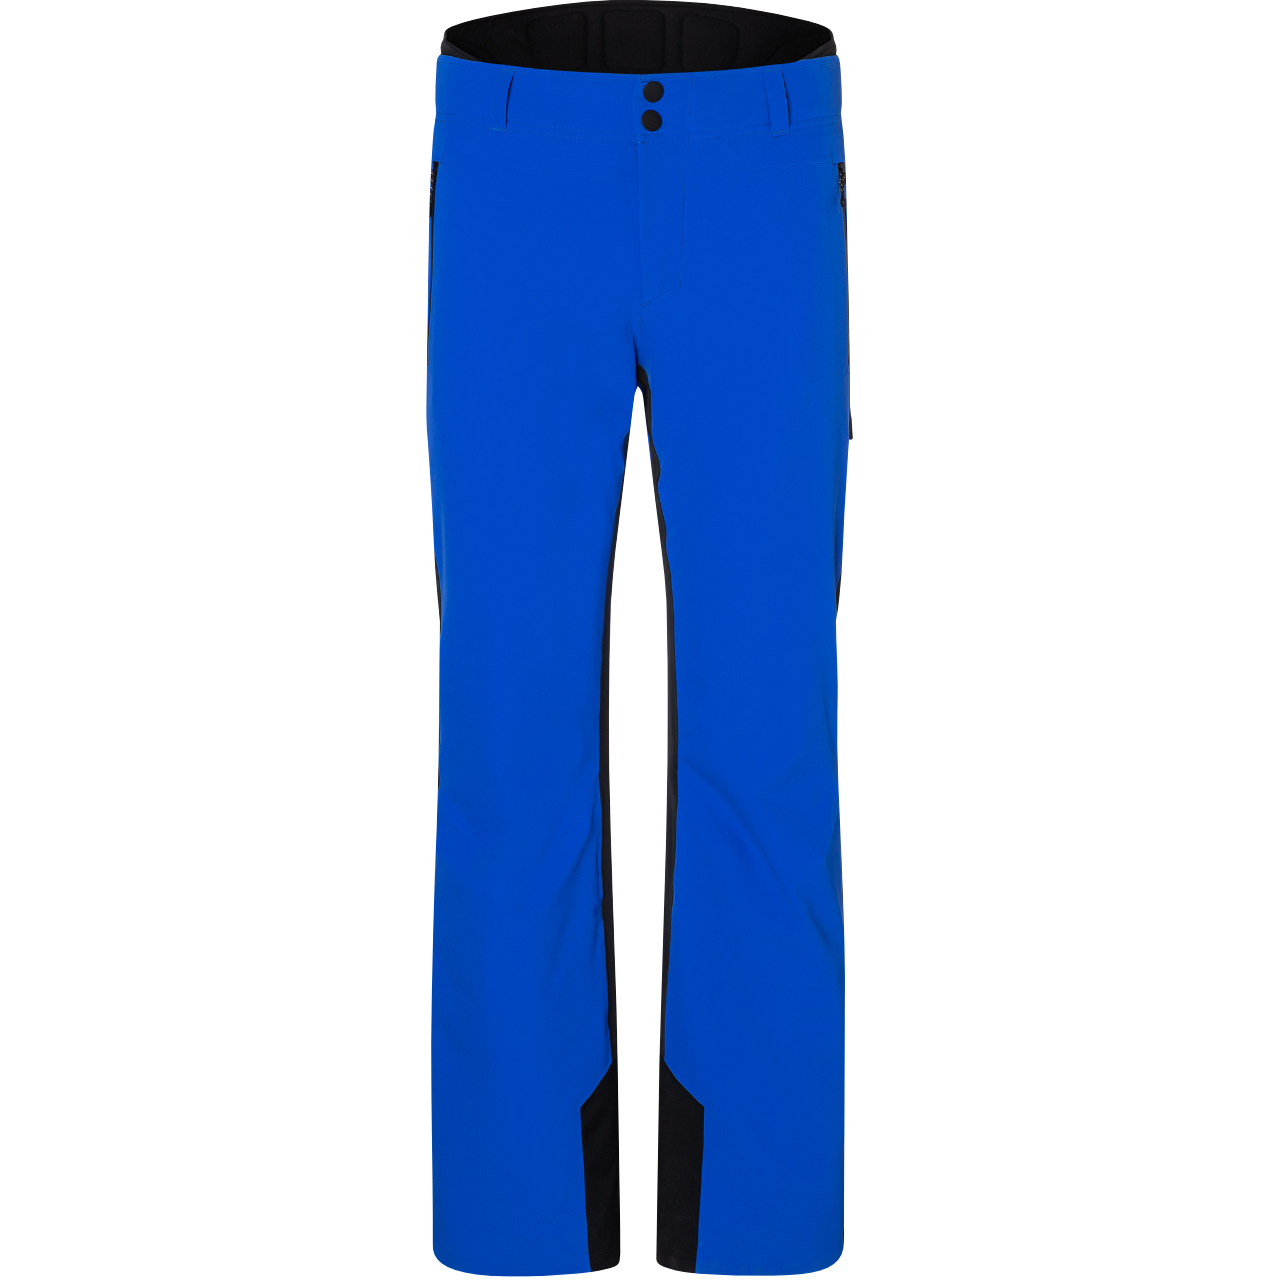 Bogner Fire + Ice Men Pants NEAL2 ocean blue/black - günstig kaufen bei ...